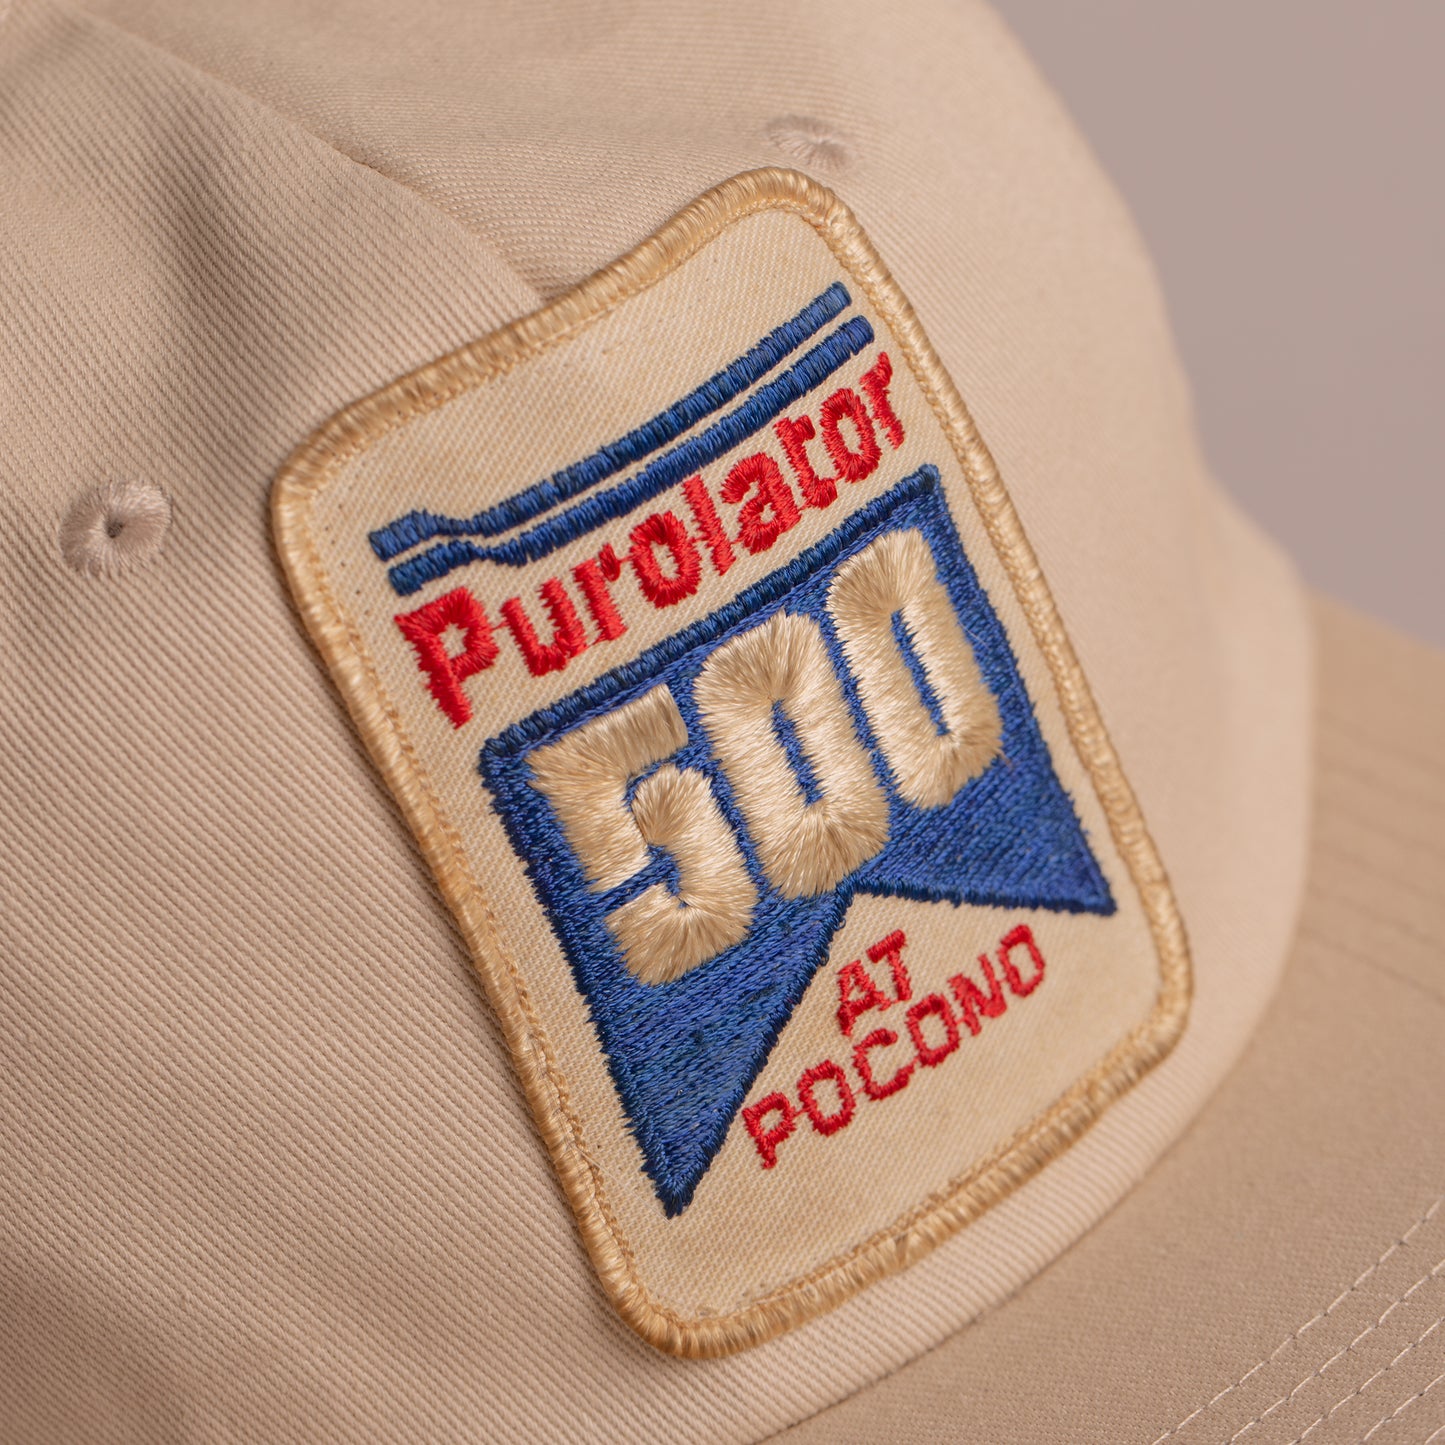 Purolator 500 at Pocono